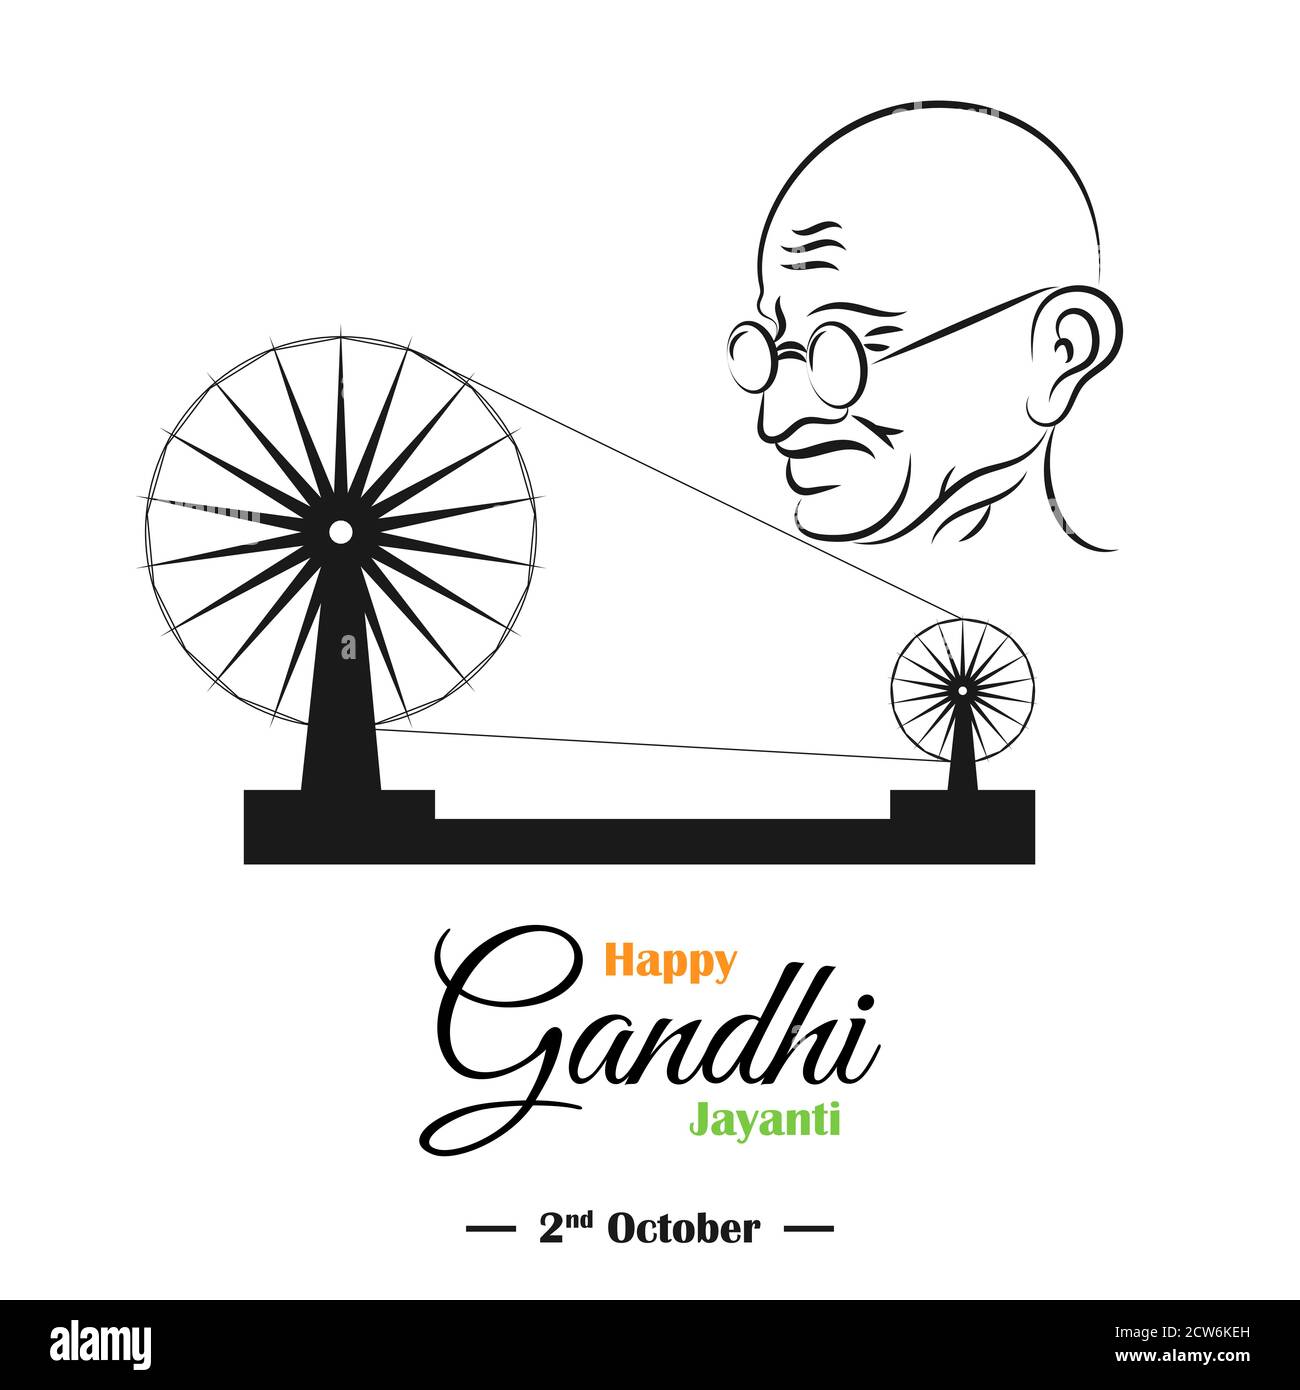 Happy Gandhi Jayanti, 2. Oktober, Mahatma Gandhi Skizze mit Spinnrad Poster, Vektor-Illustration Stock Vektor